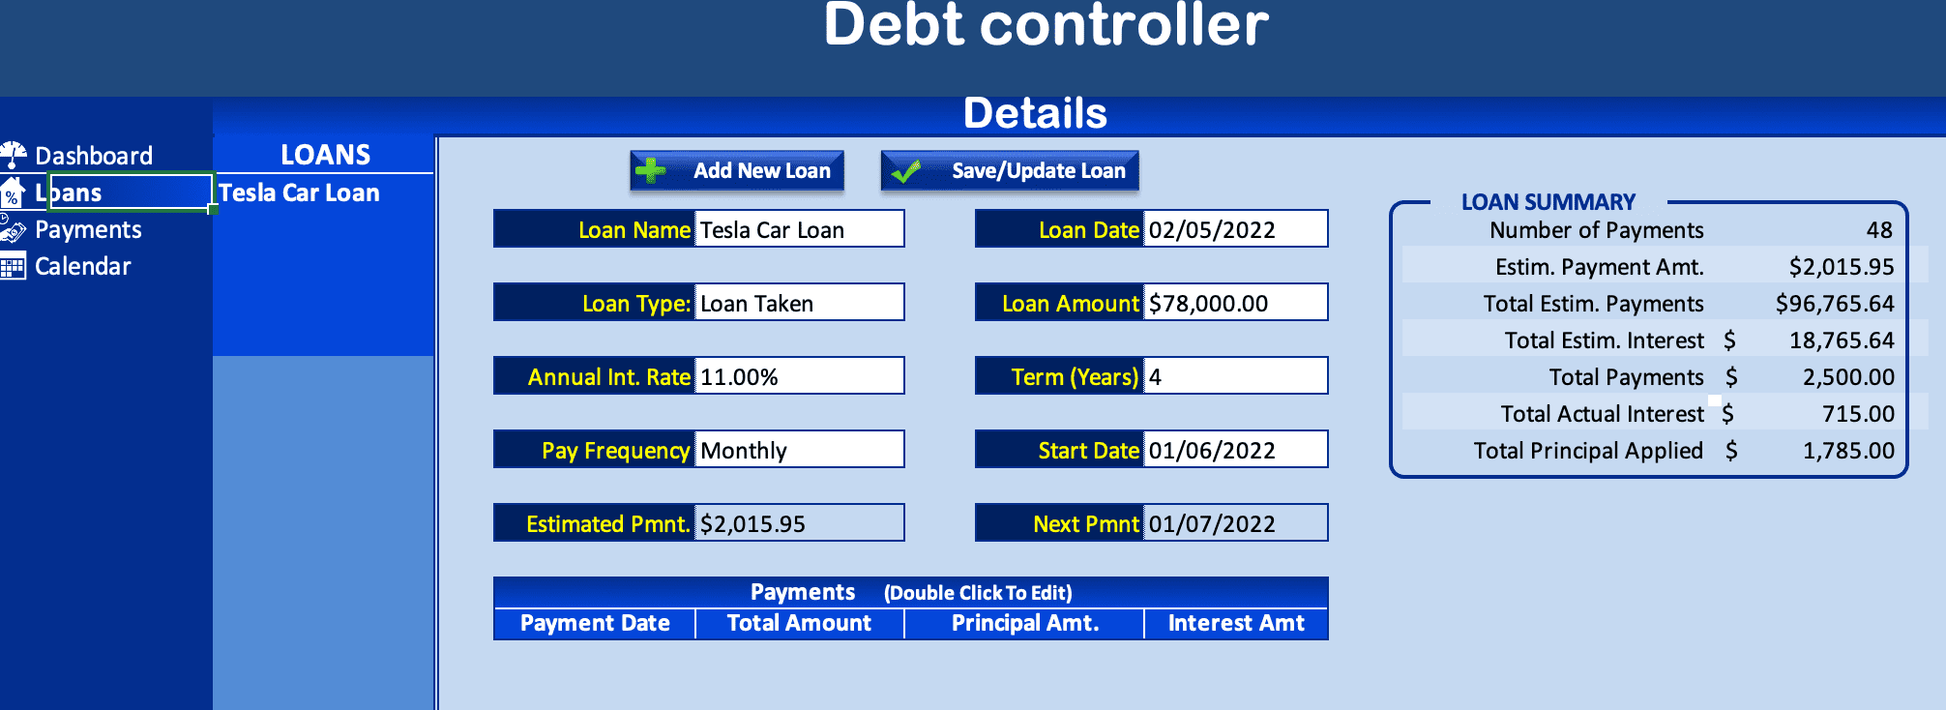 Personal Debt Controller | XLDB Spreadsheet Solutions